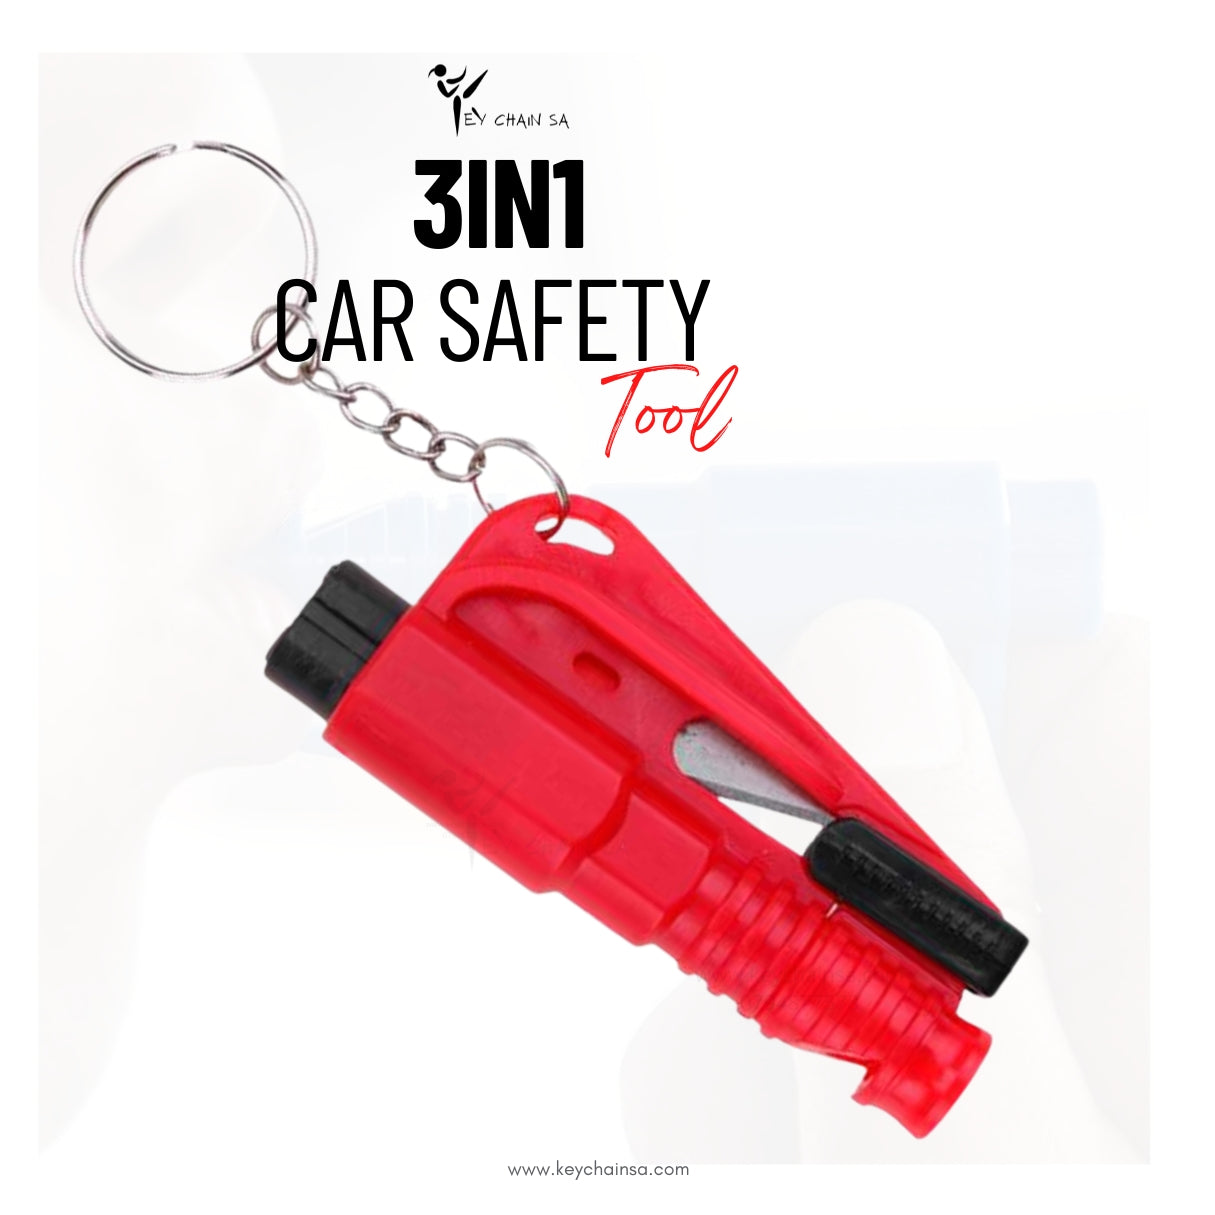 Car Safety Hammer 3 in 1 Car Window Breaker Seat Belt Cutter Key Chain  Portable Car Emergency Escape Tool Life Saving Survival Kit Black on OnBuy